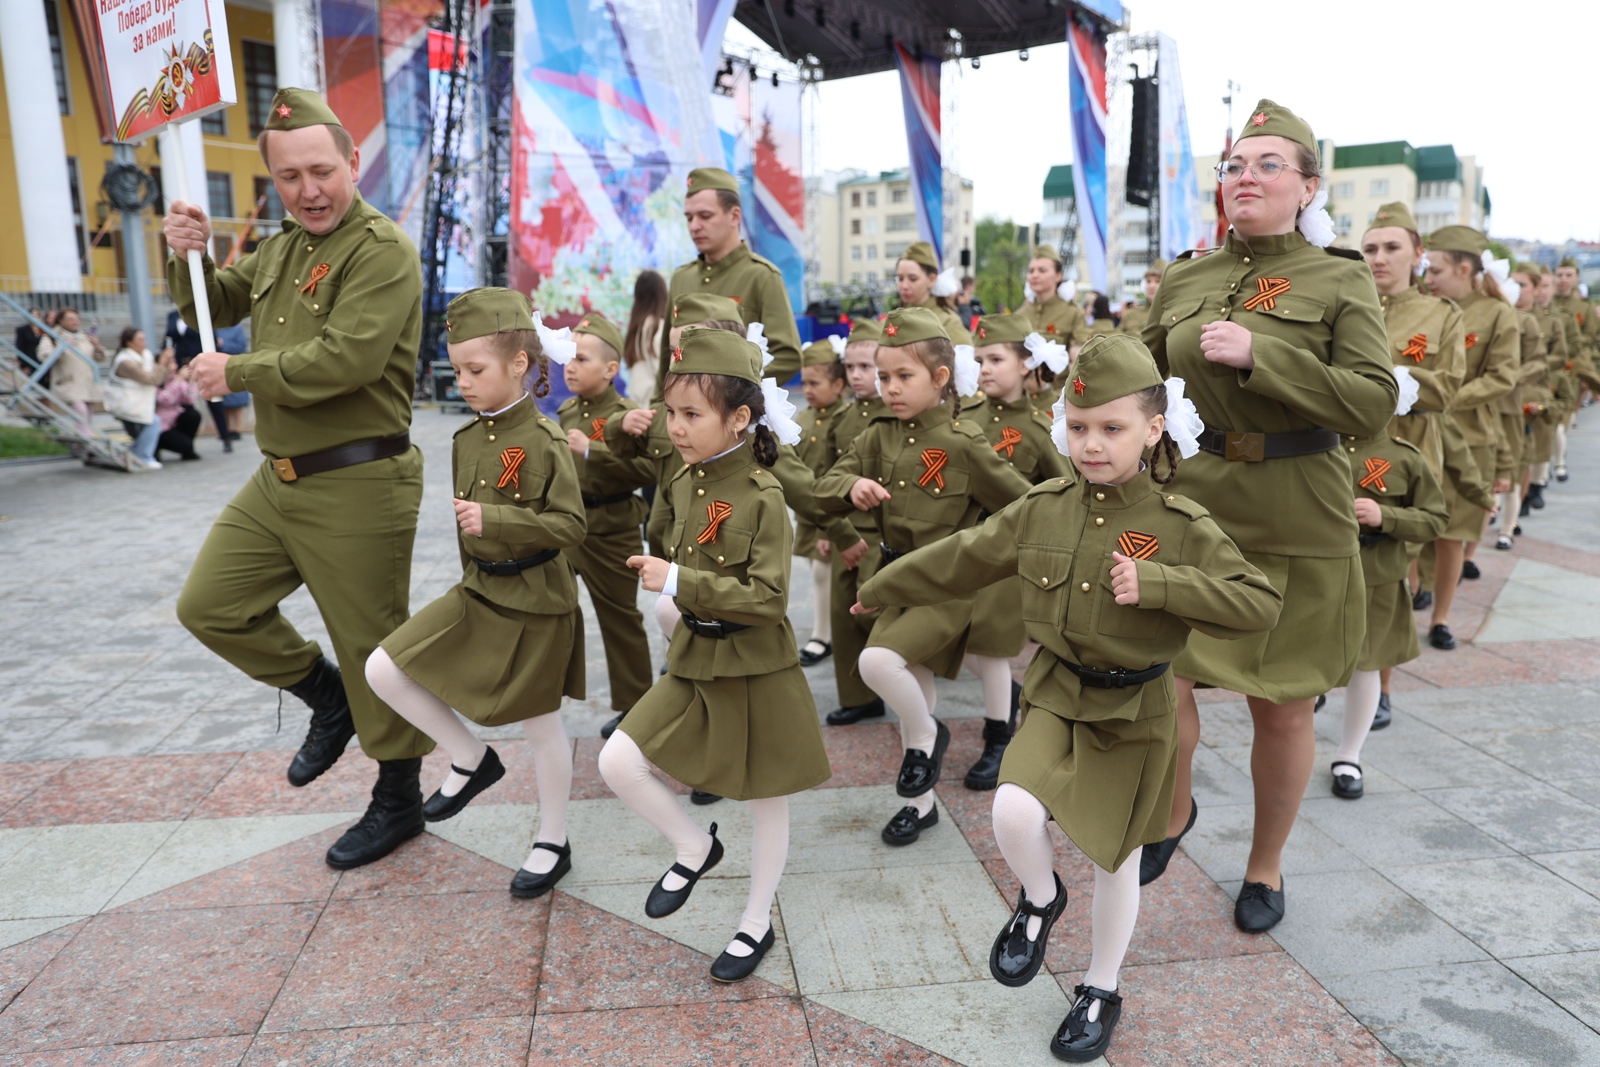 Парад дошколят и юнармейцев по силе эмоций не уступает военному – Олег Николаев